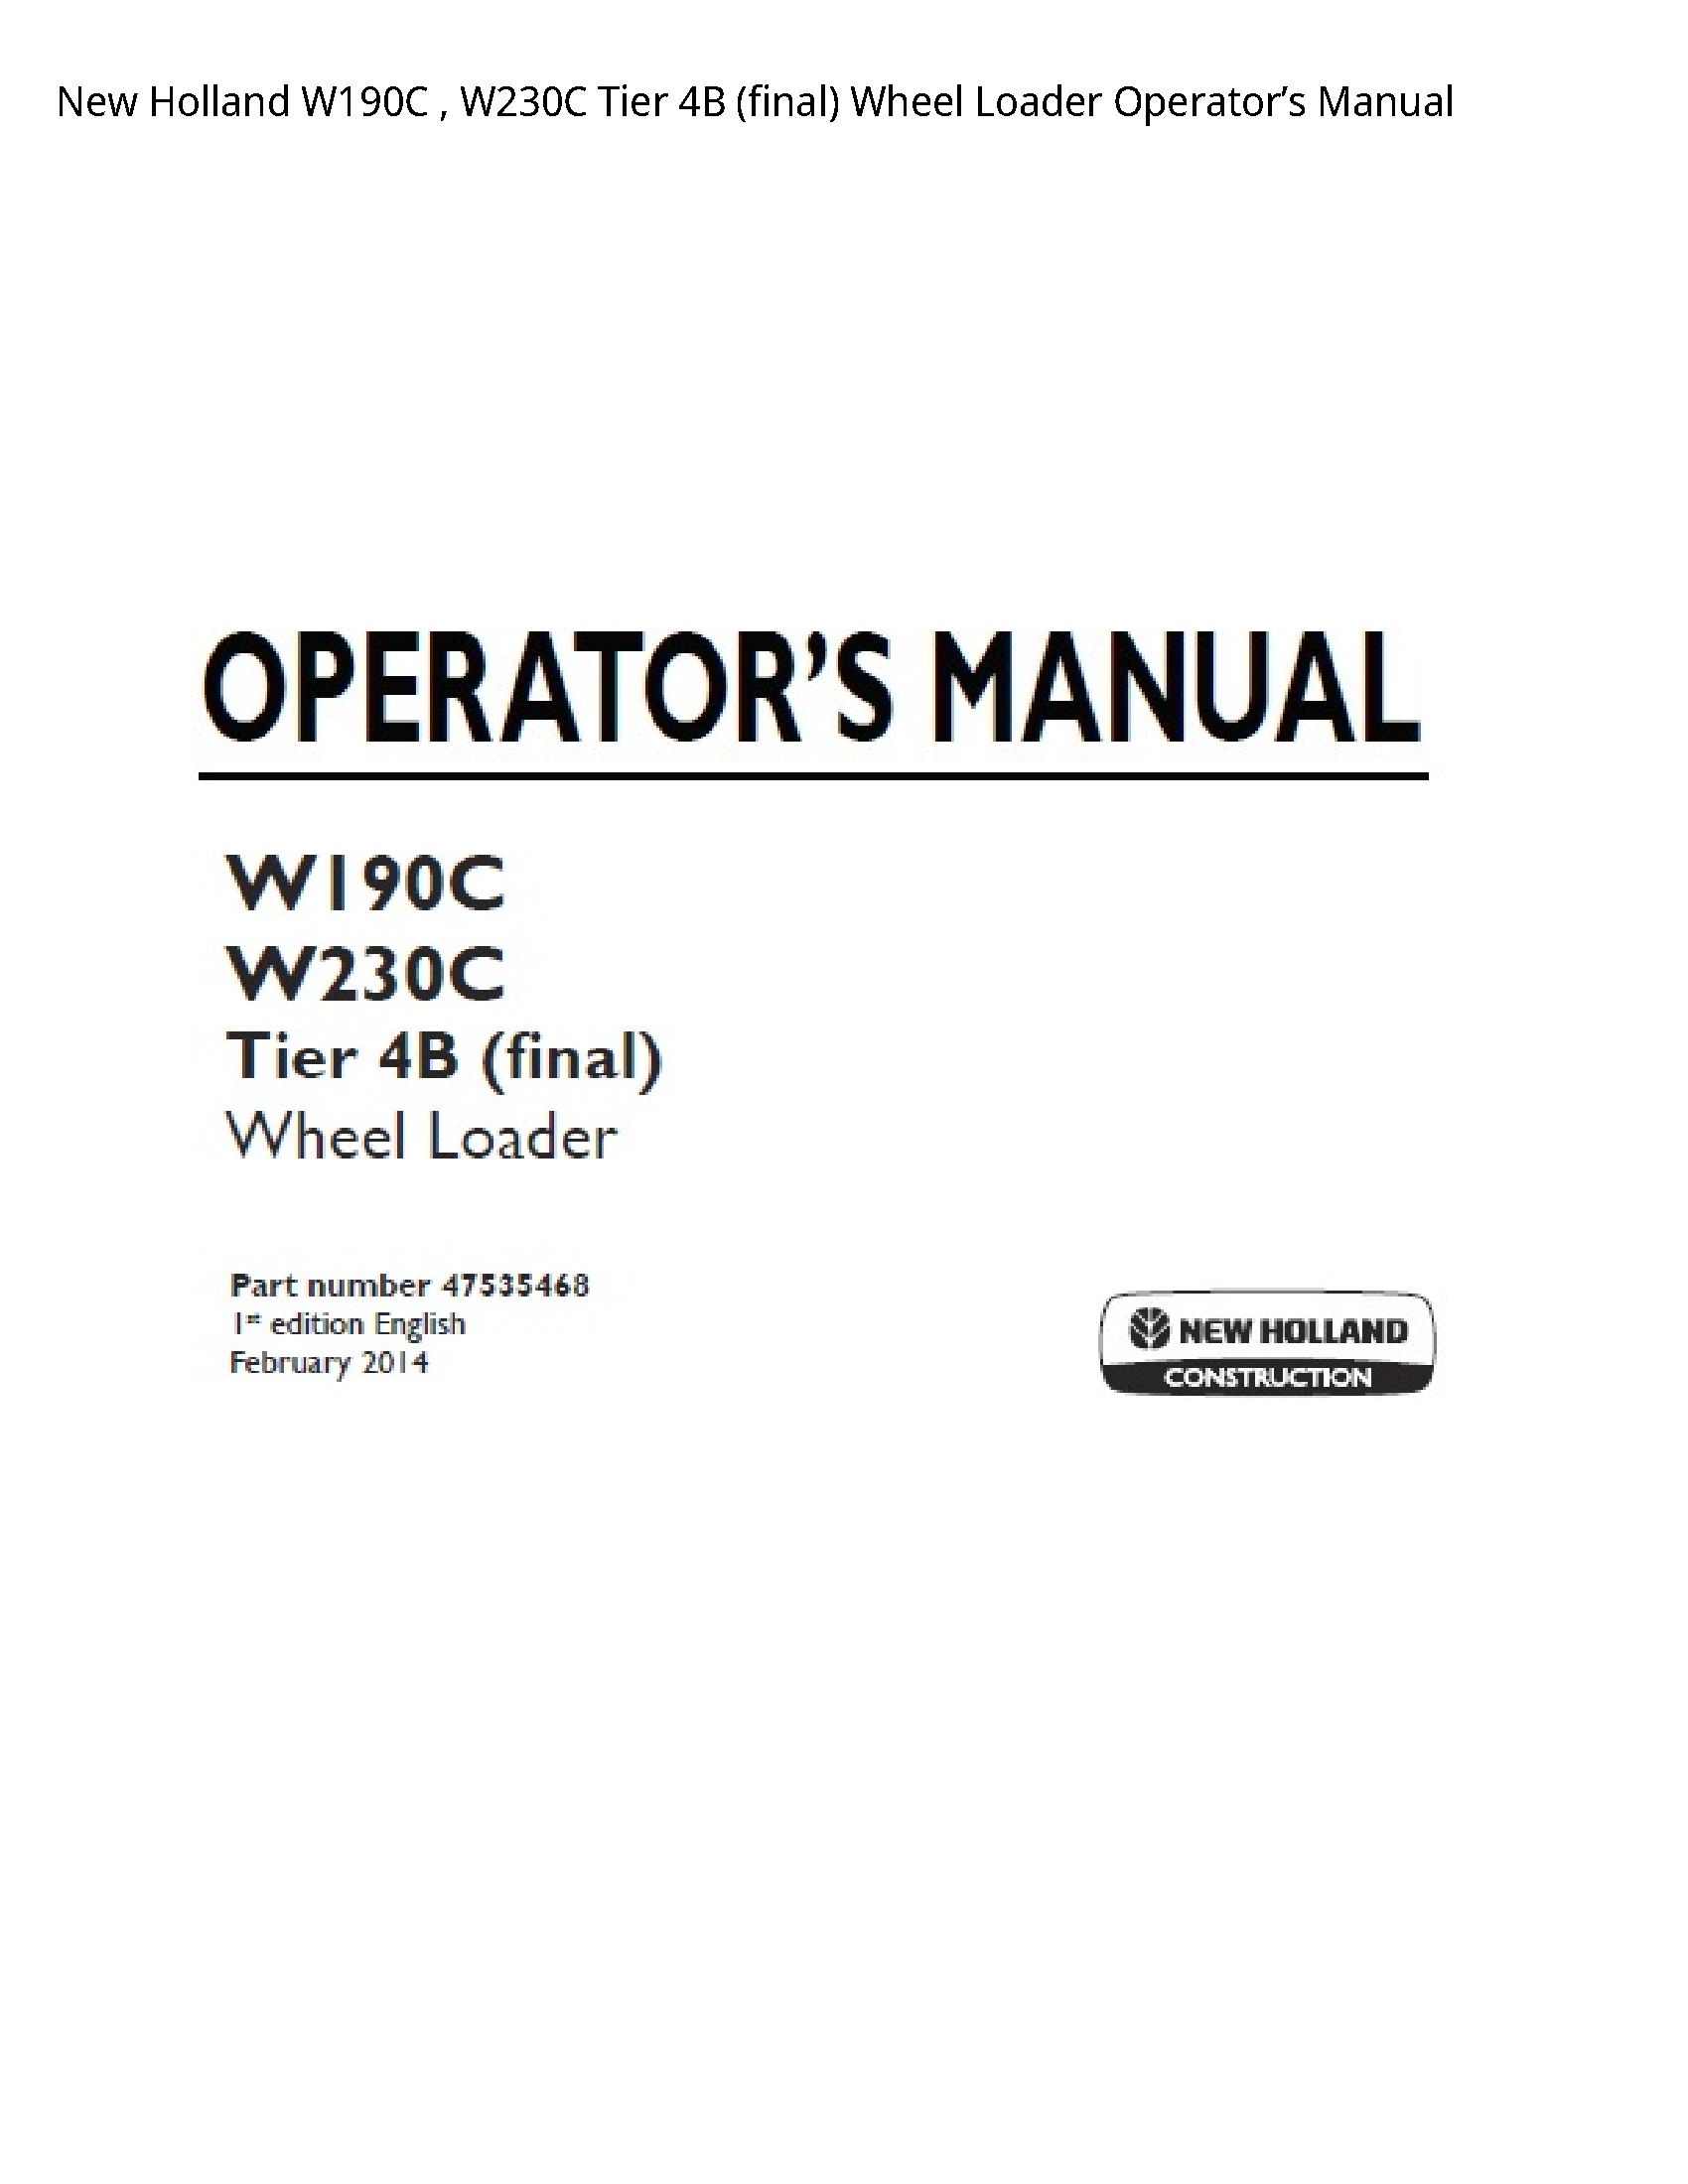 New Holland W190C Tier (final) Wheel Loader Operator’s manual